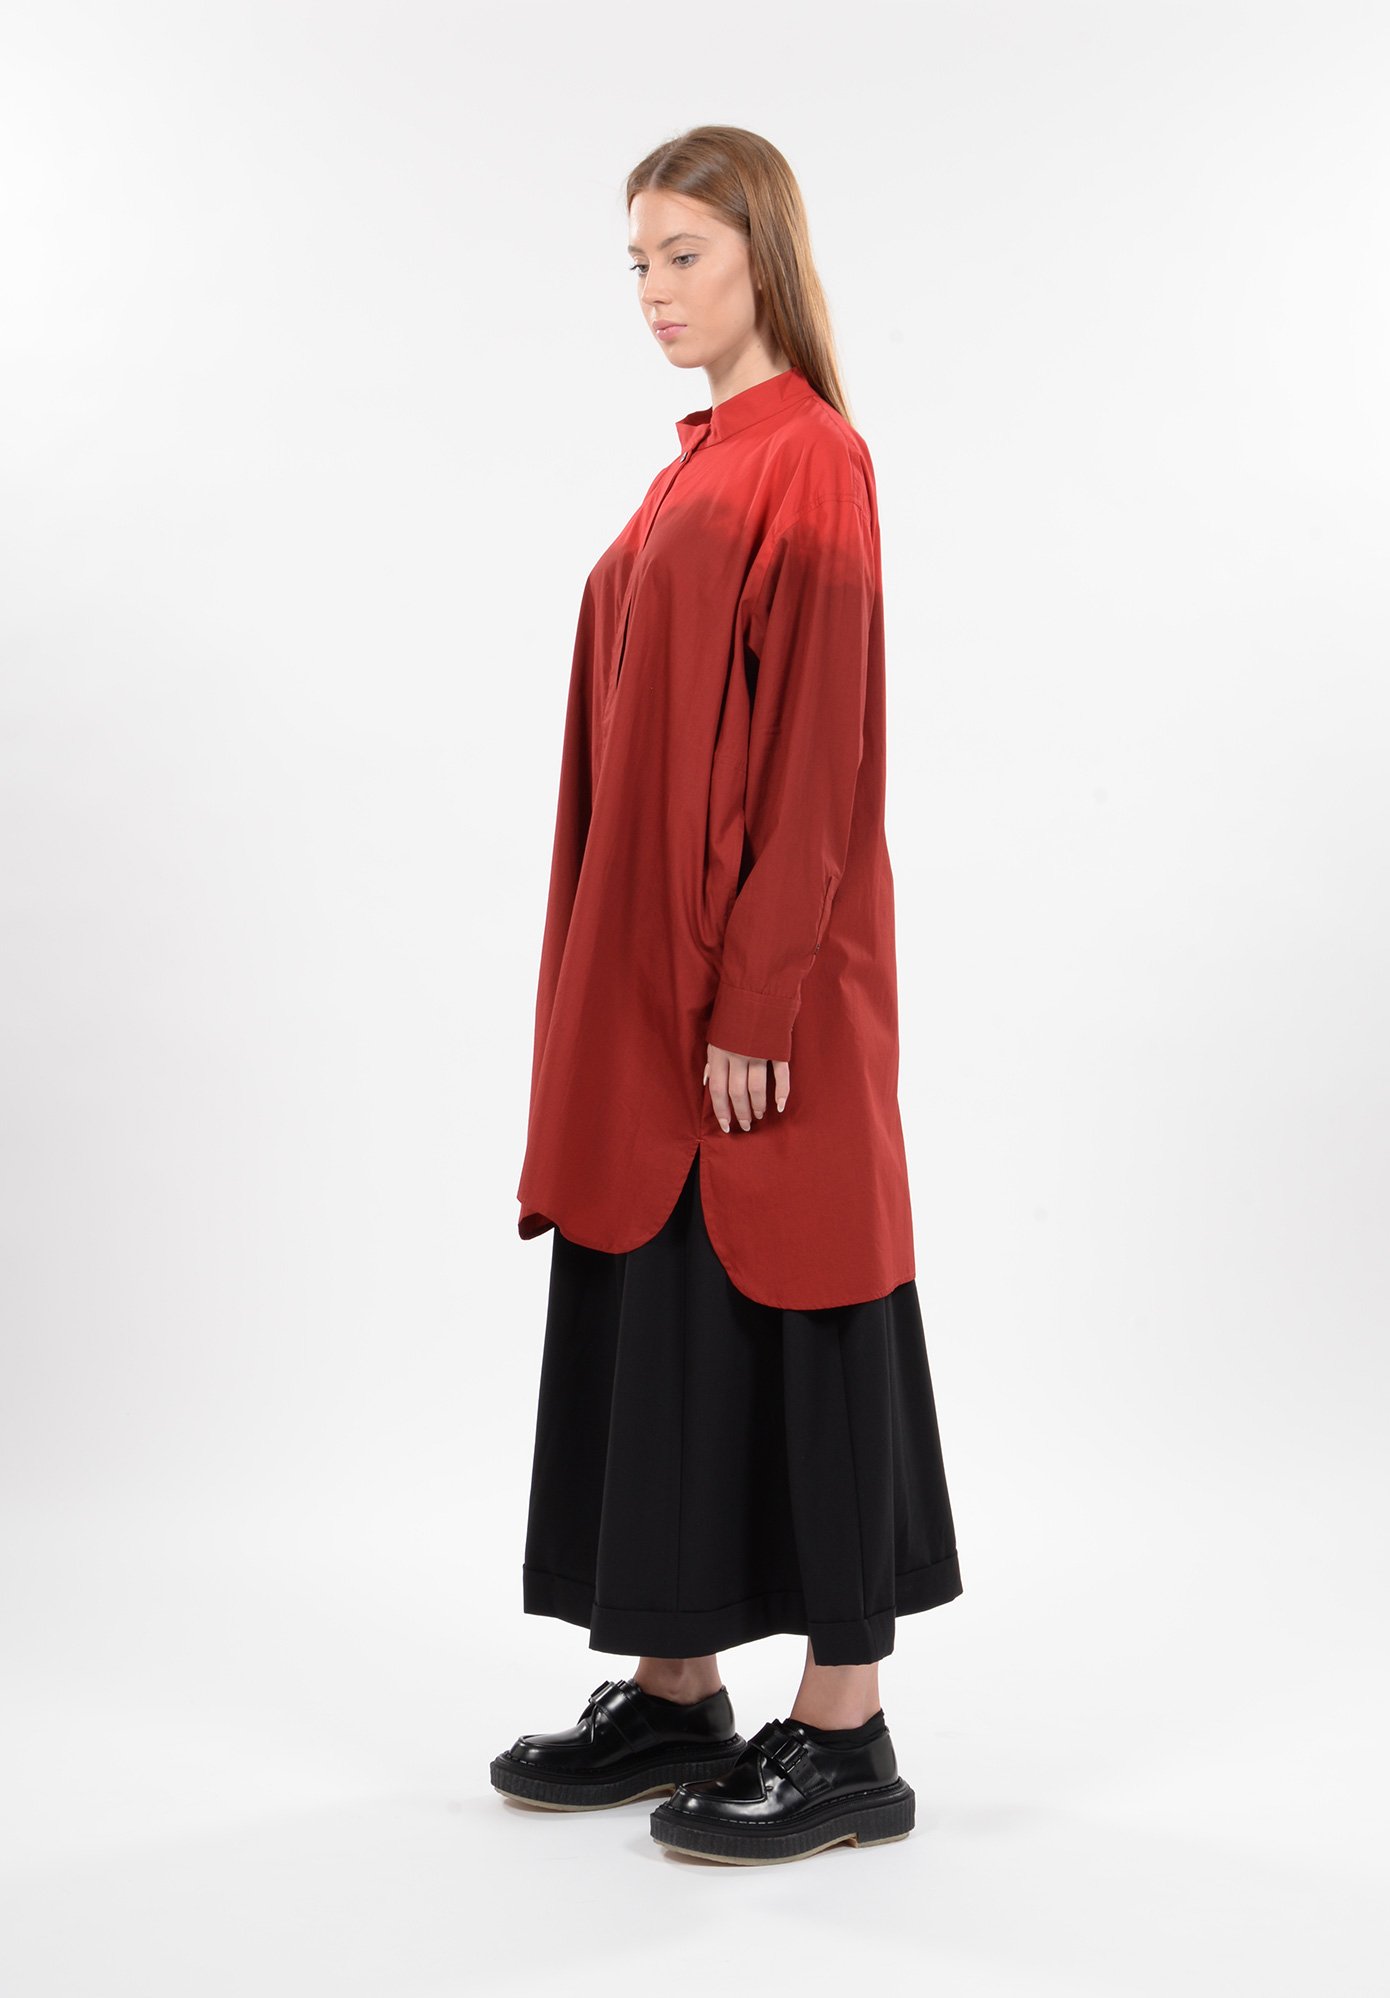 MOYURU - OMBRE SHIRT DRESS - RED | PURPLE